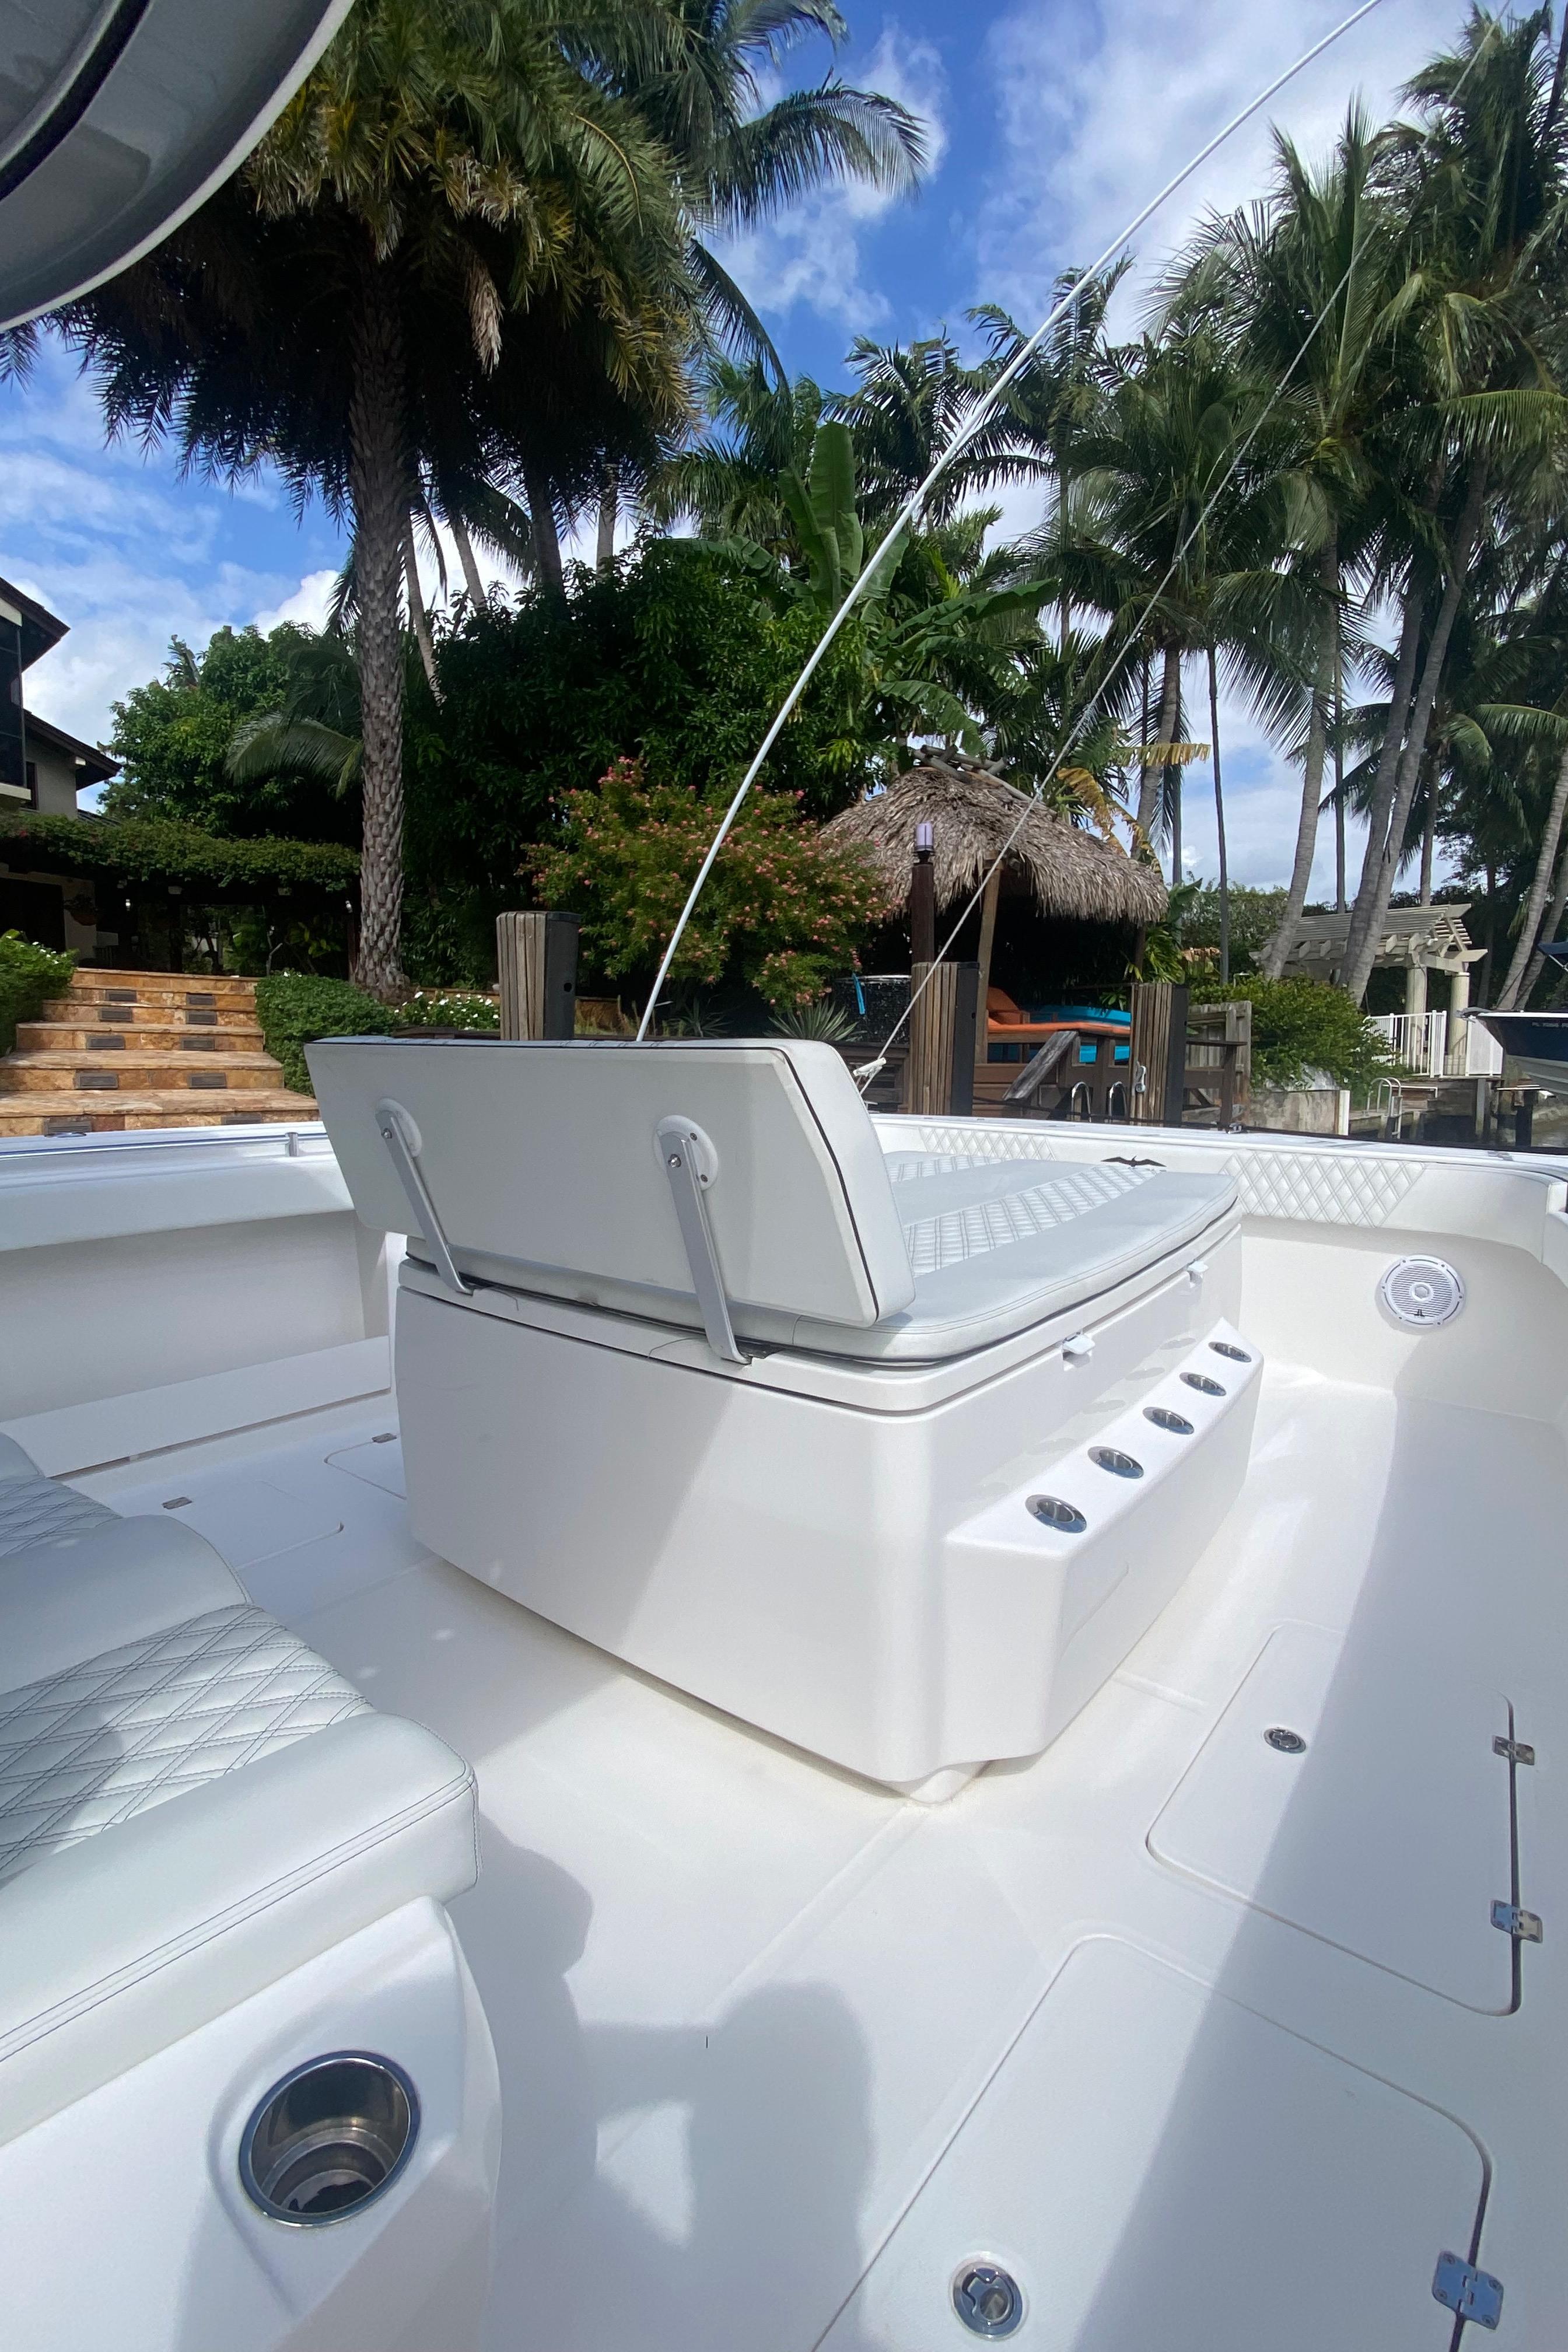 2019 Invincible 40 Catamaran Power Catamaran for sale - YachtWorld